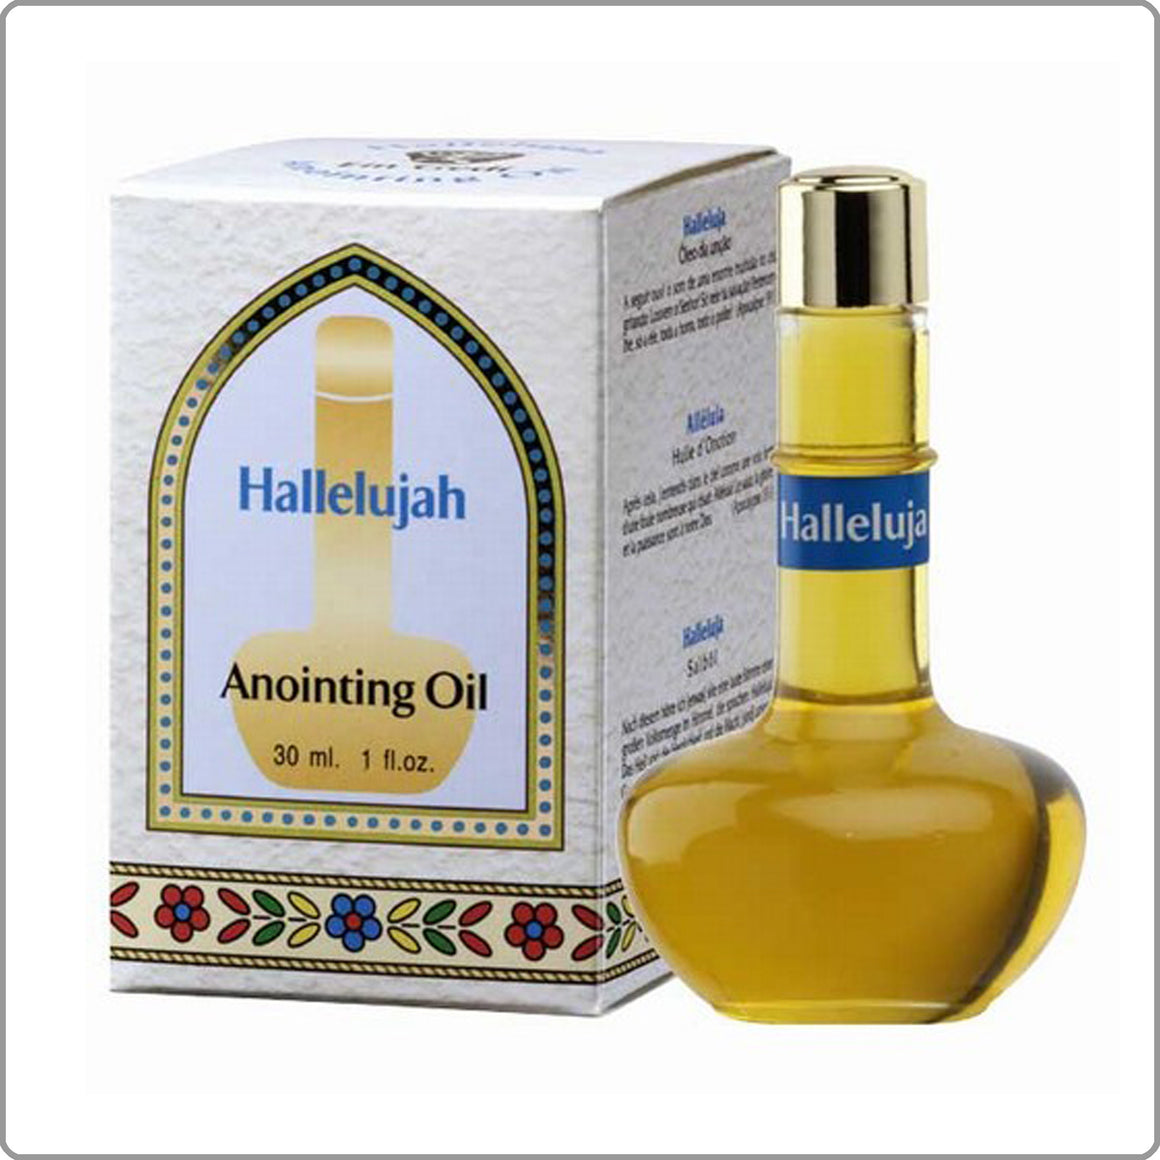 Hallelujah - Anointing Oil 30 ml.